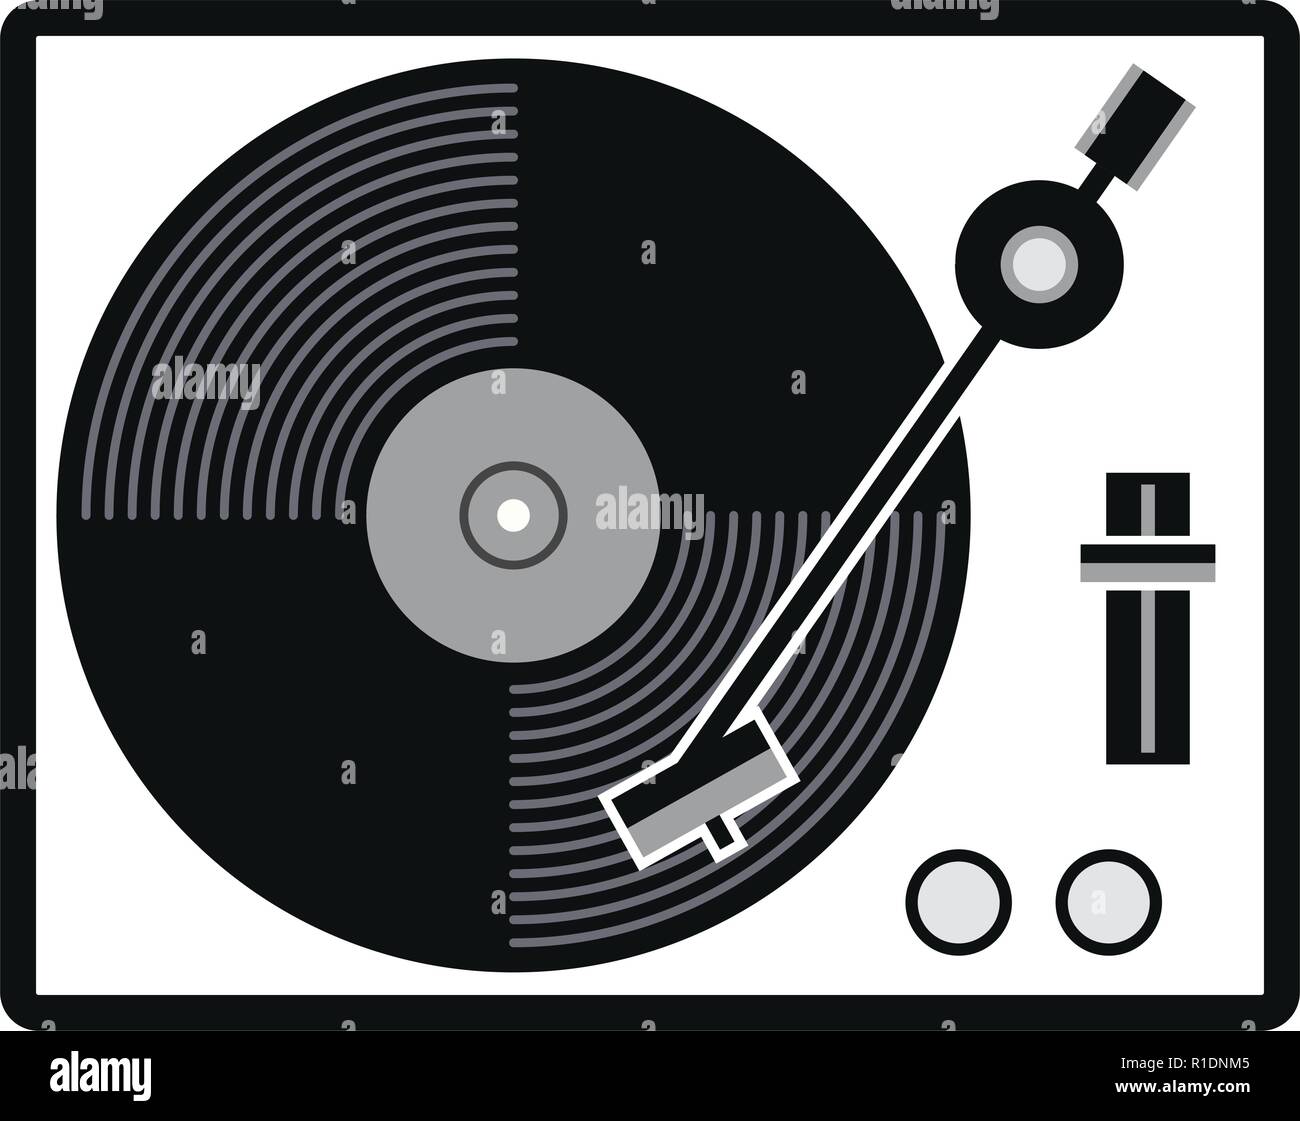 vector turntable vinyl record player icon. analog audio equipment symbol isolated on white background. retro black vinyl record illustration Stock Vector